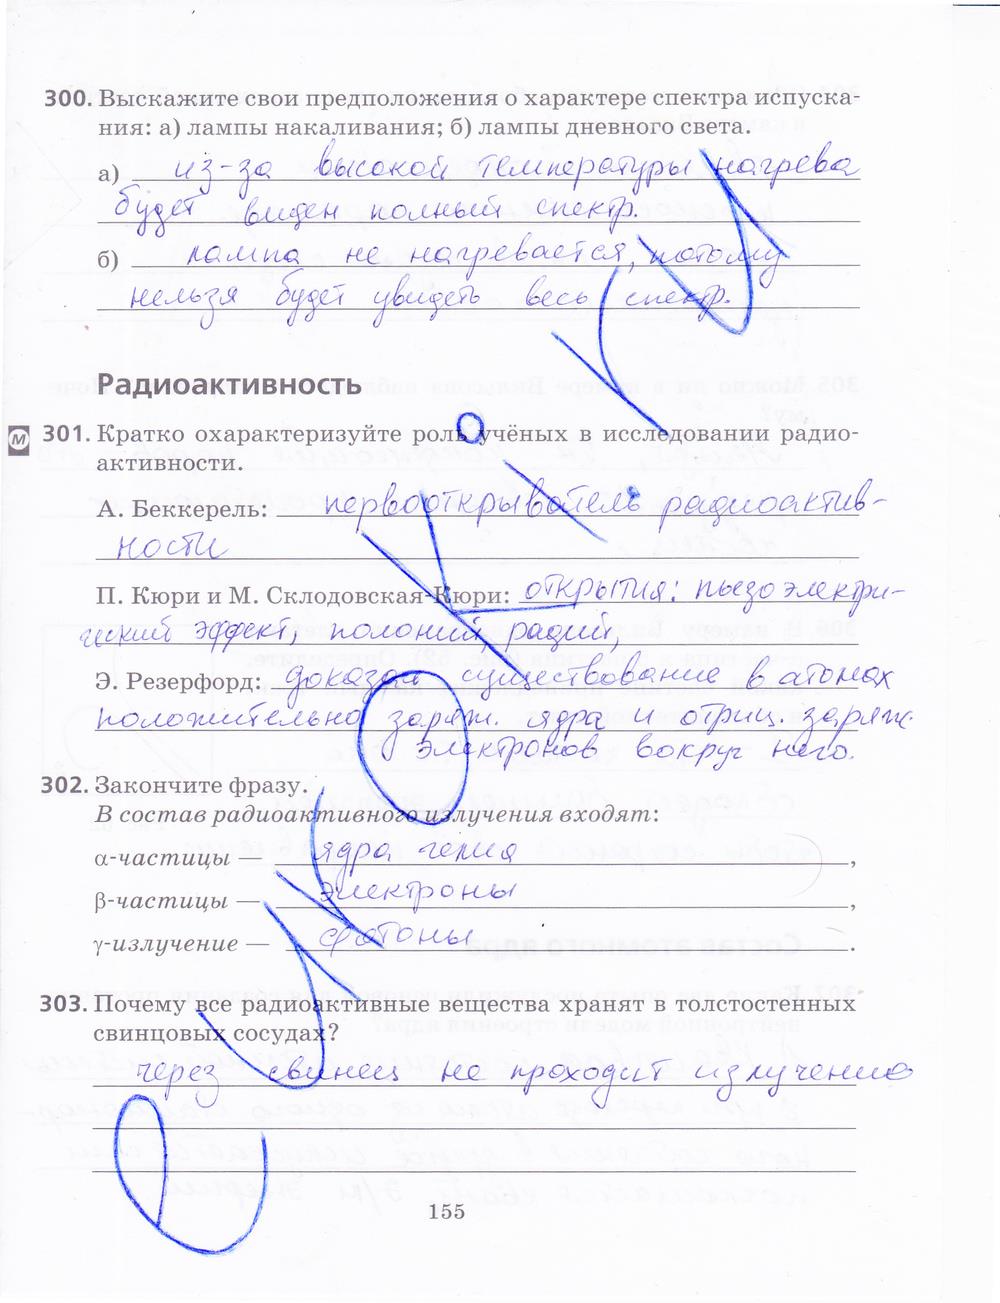 гдз 9 класс рабочая тетрадь страница 155 физика Пурышева, Важеевская, Чаругин